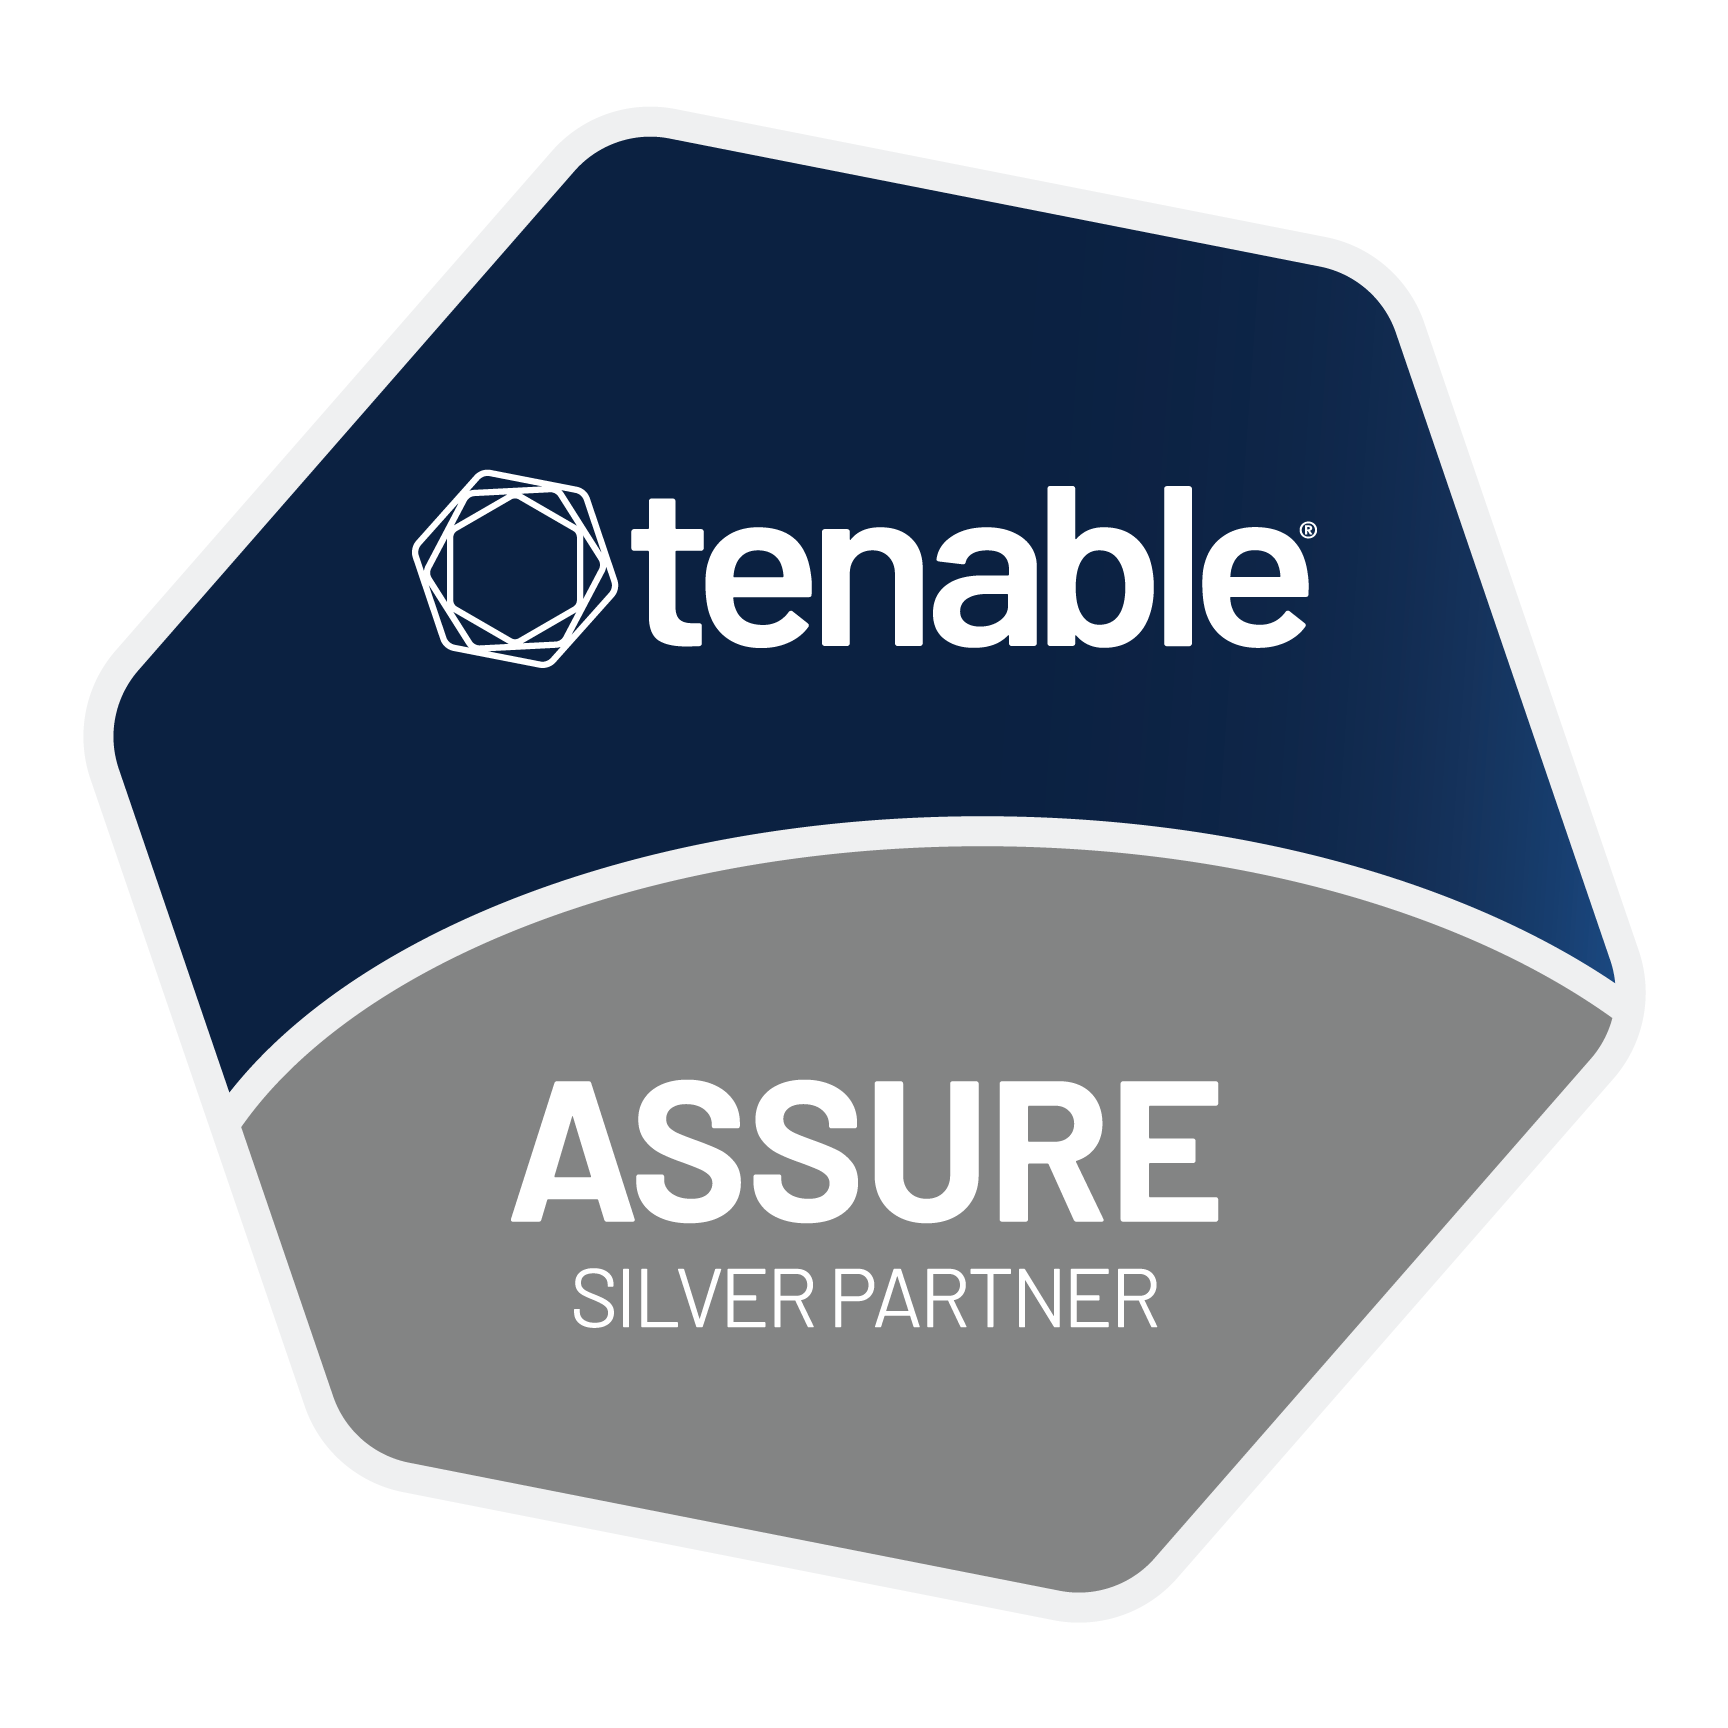 Tenable Assure 銀級合作夥伴徽章